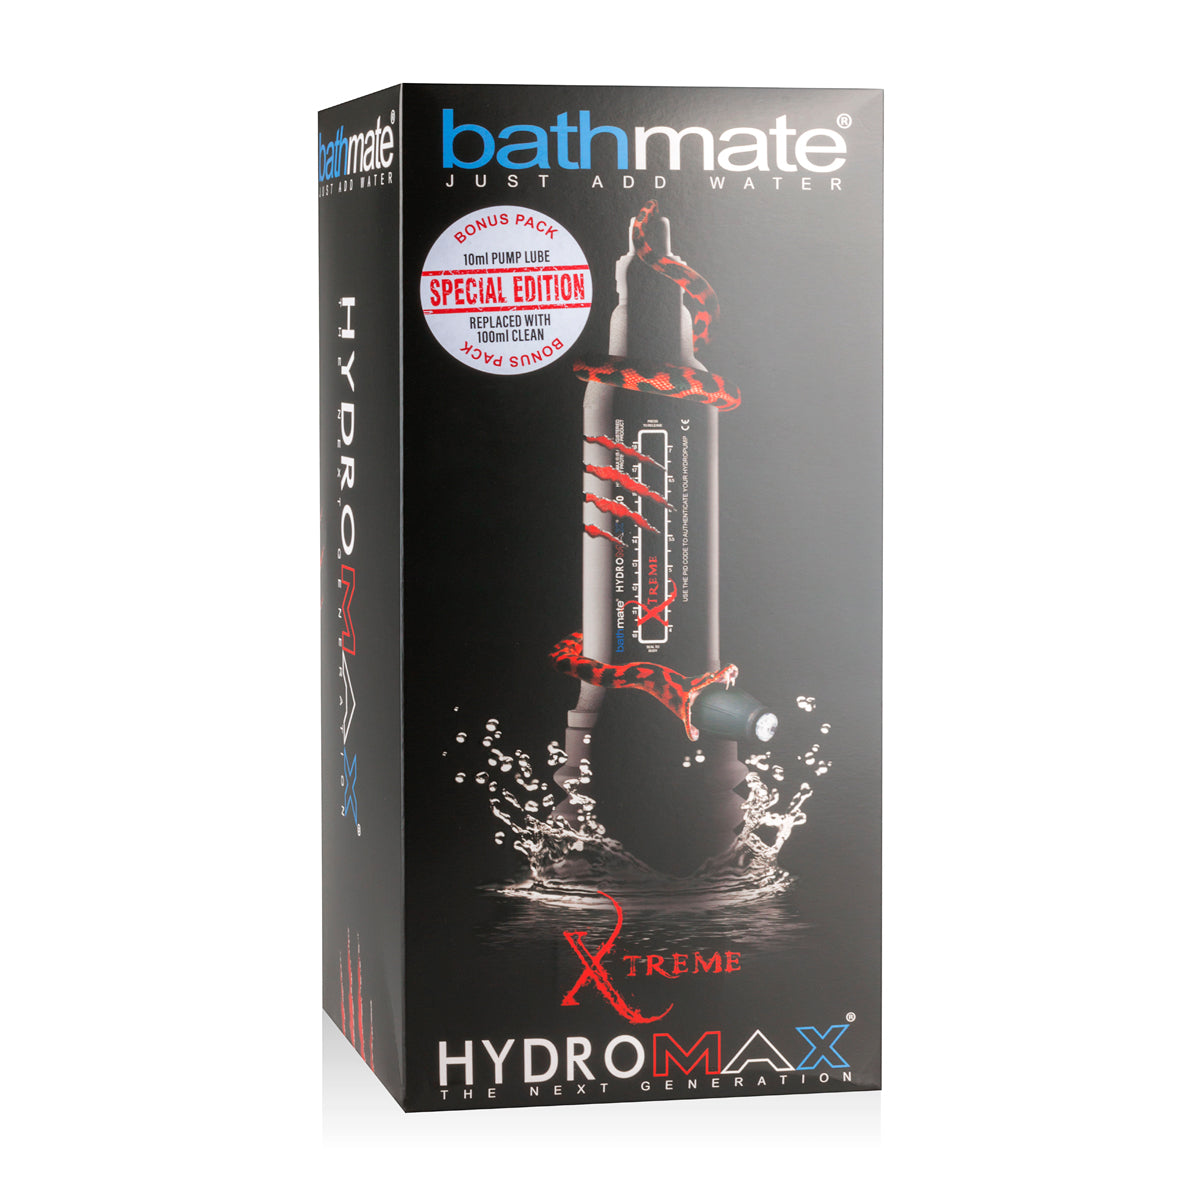 Bathmate HydroXtreme 5 - Transparent